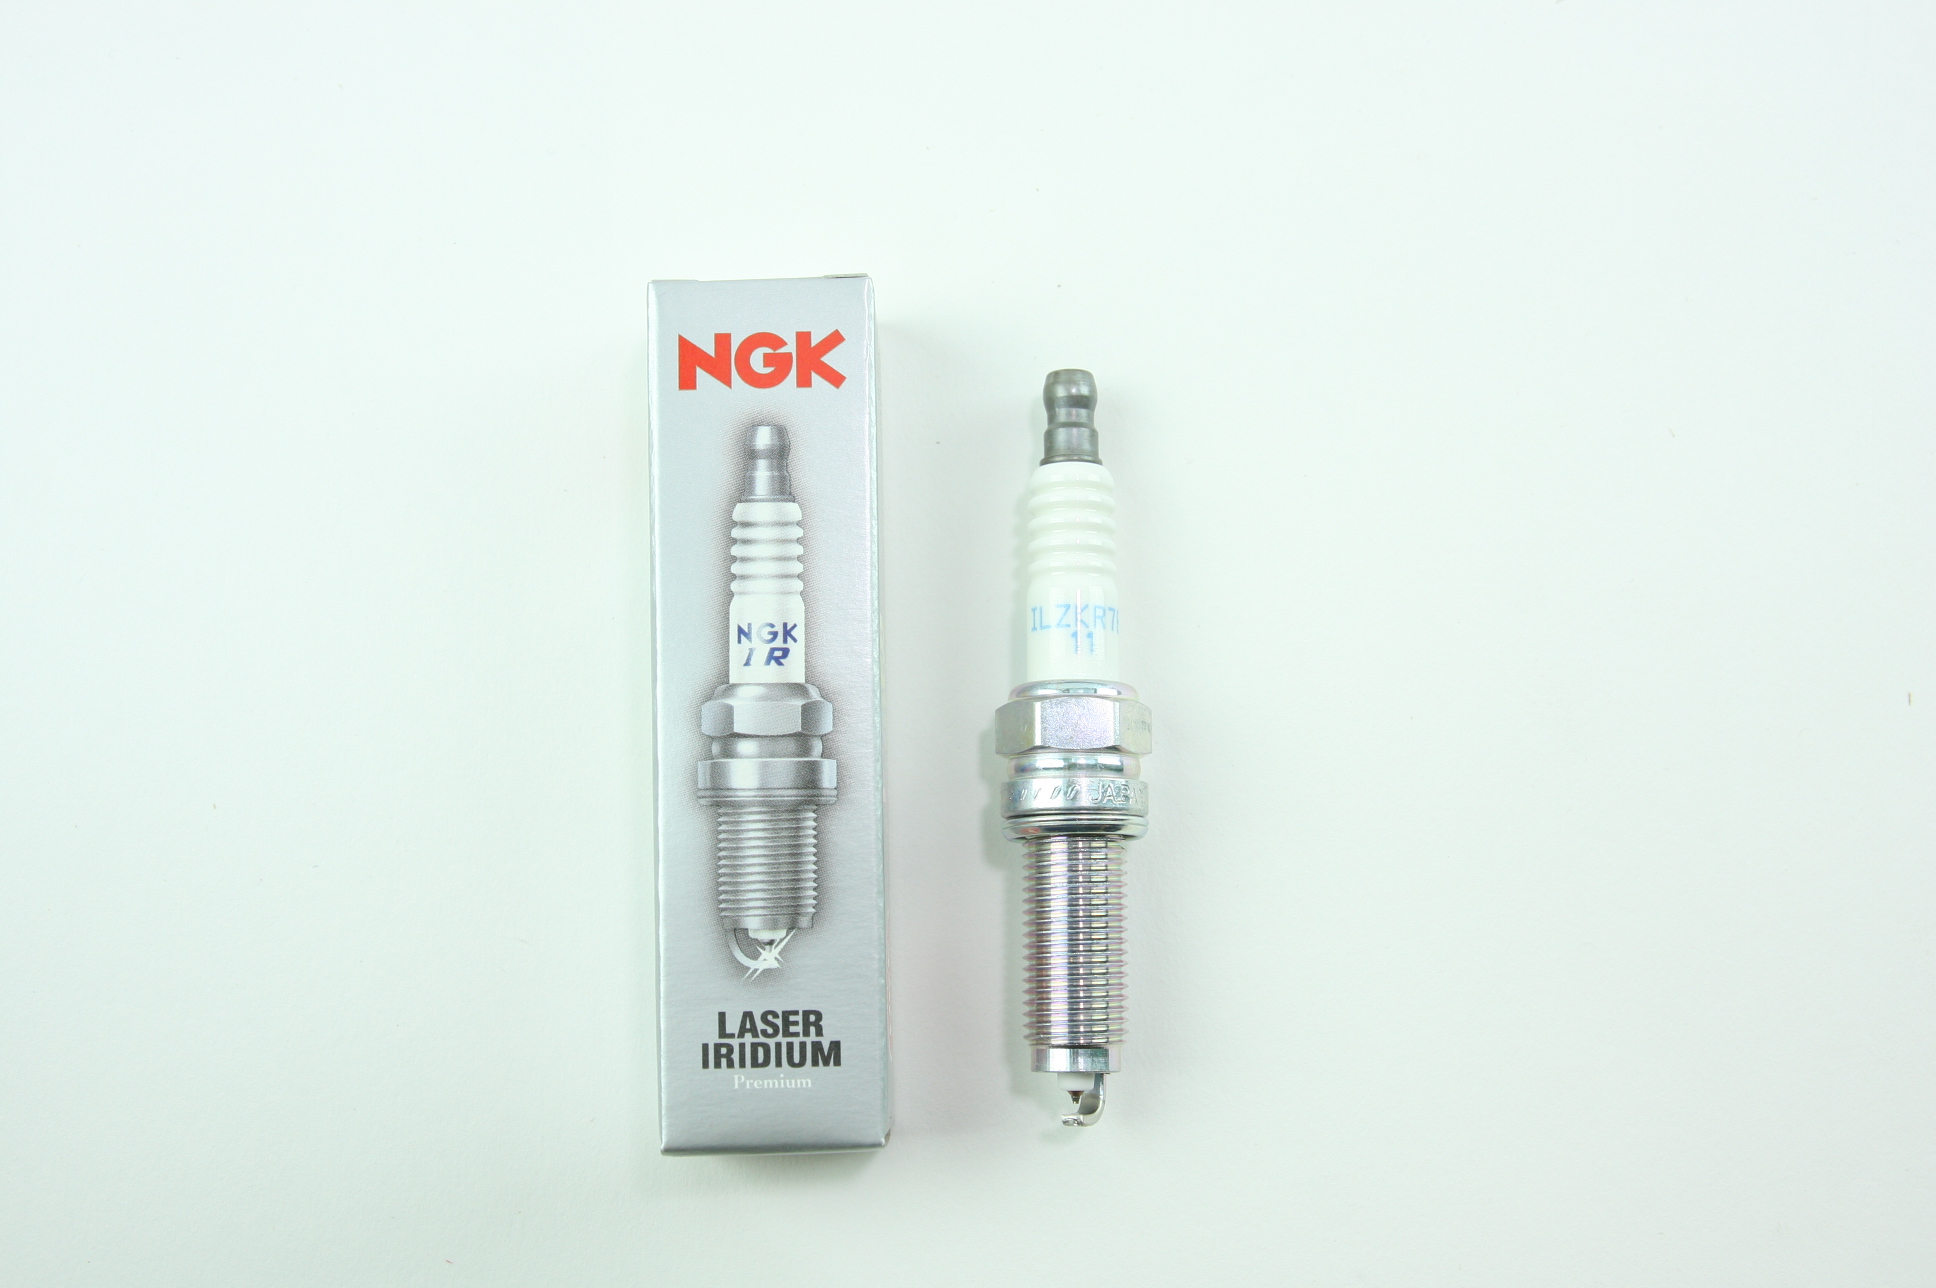 New Set of 8 NGK 7751 ILZKR7B11 Laser Iridium and Platinum Spark Plugs - image 5